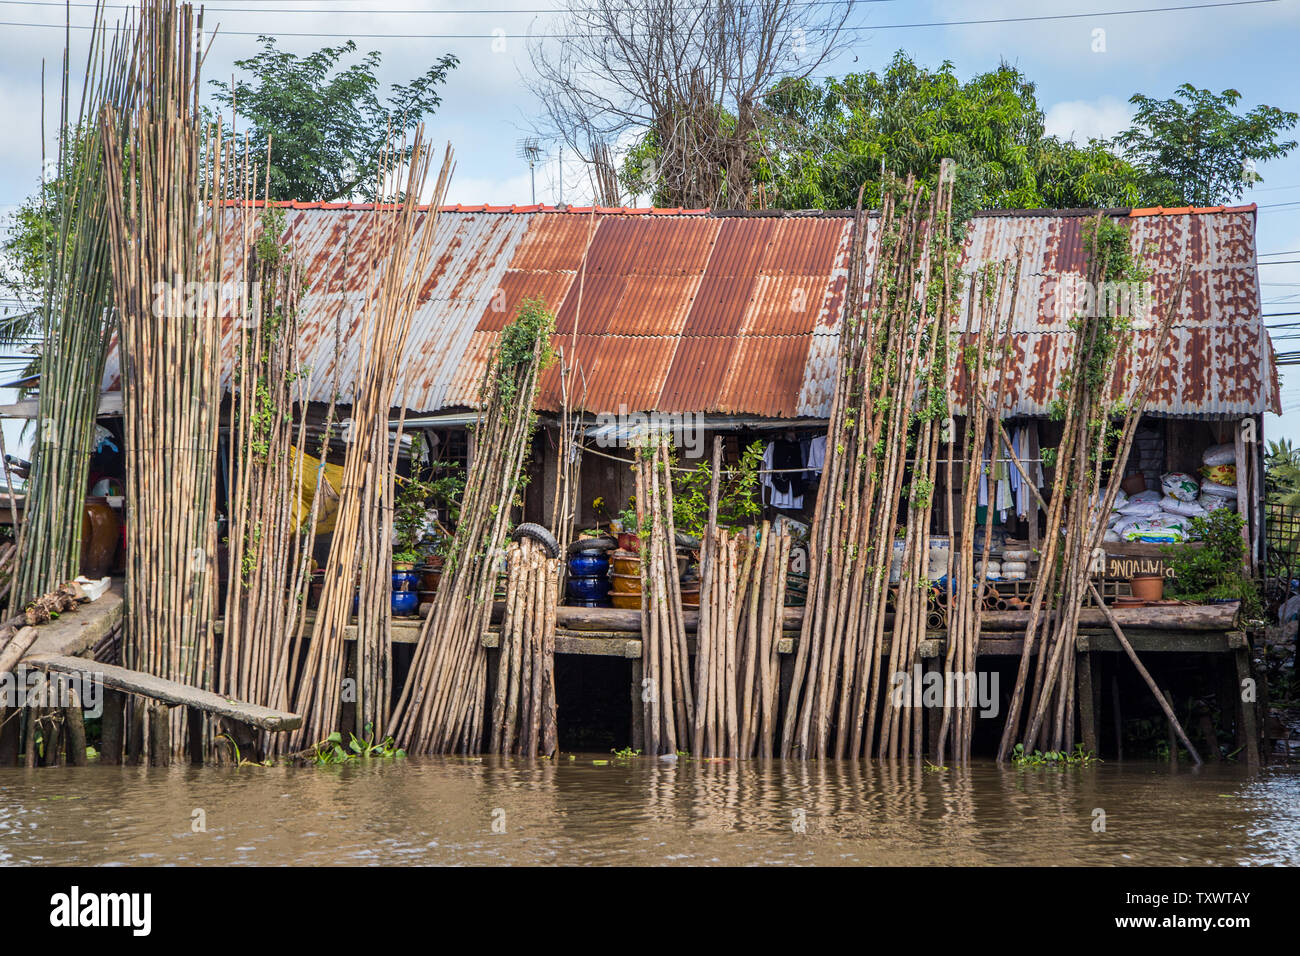 Huen Cai, Tien Giang, Vietnam - Dezember 16, 2013: Eine bescheidene vietnamesischen Haus am Mekong Fluss in der Nähe der schwimmenden Markt Stockfoto